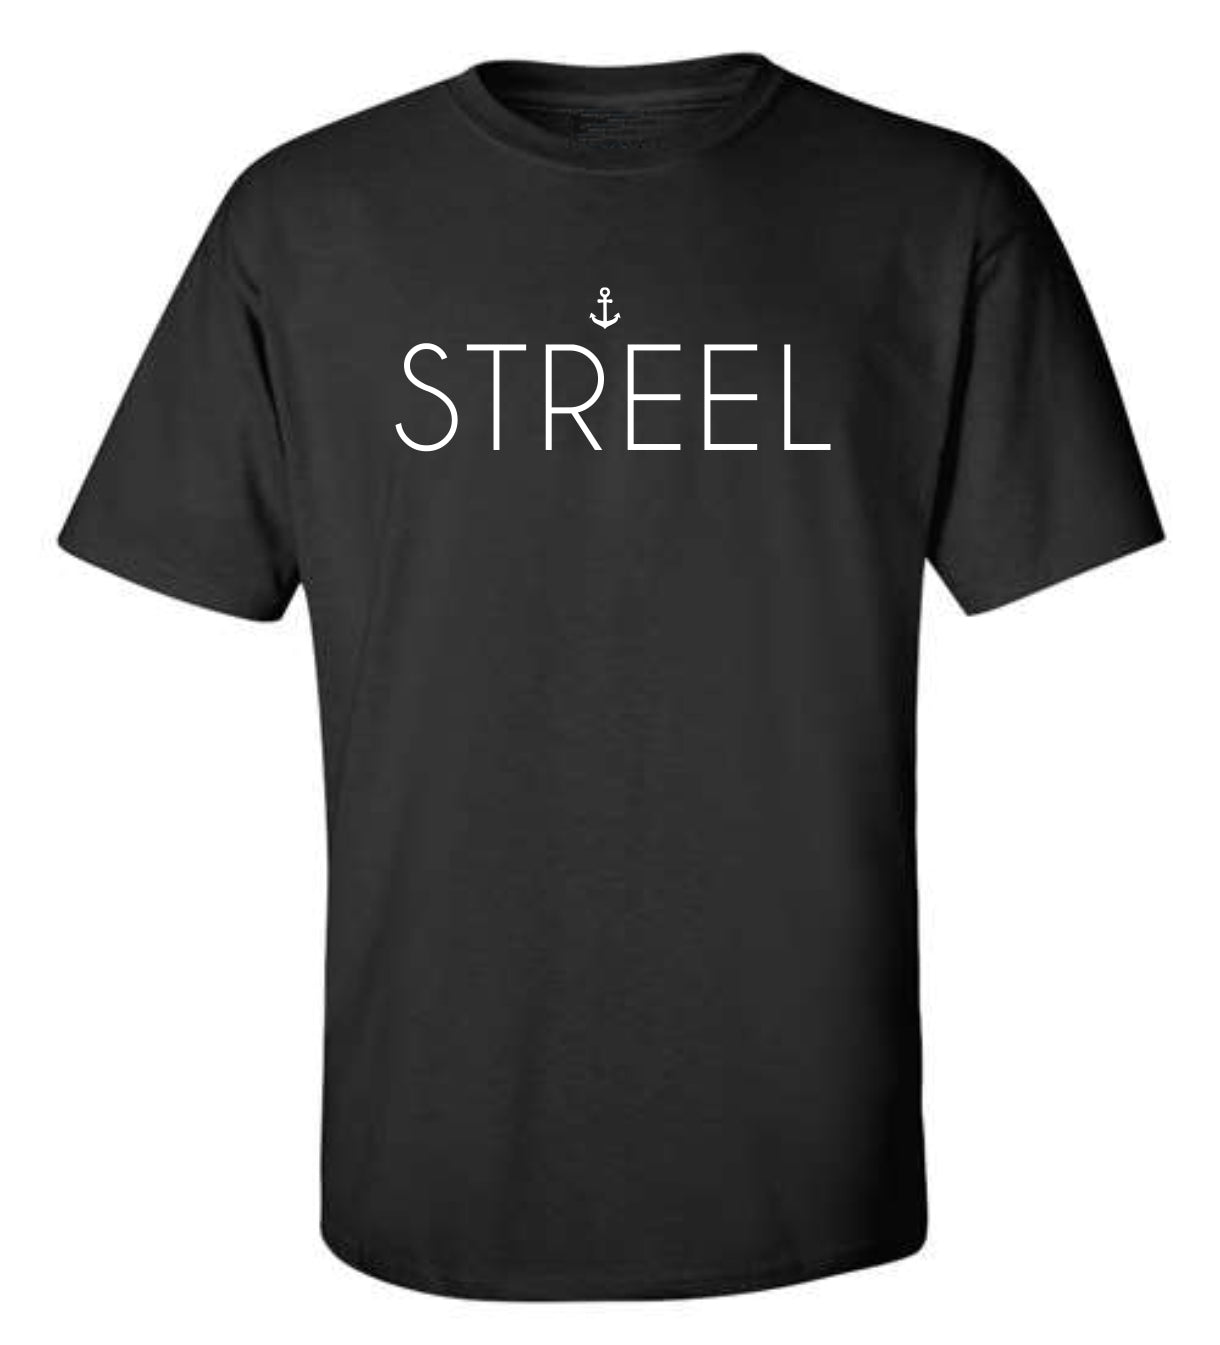 "Streel" T-Shirt